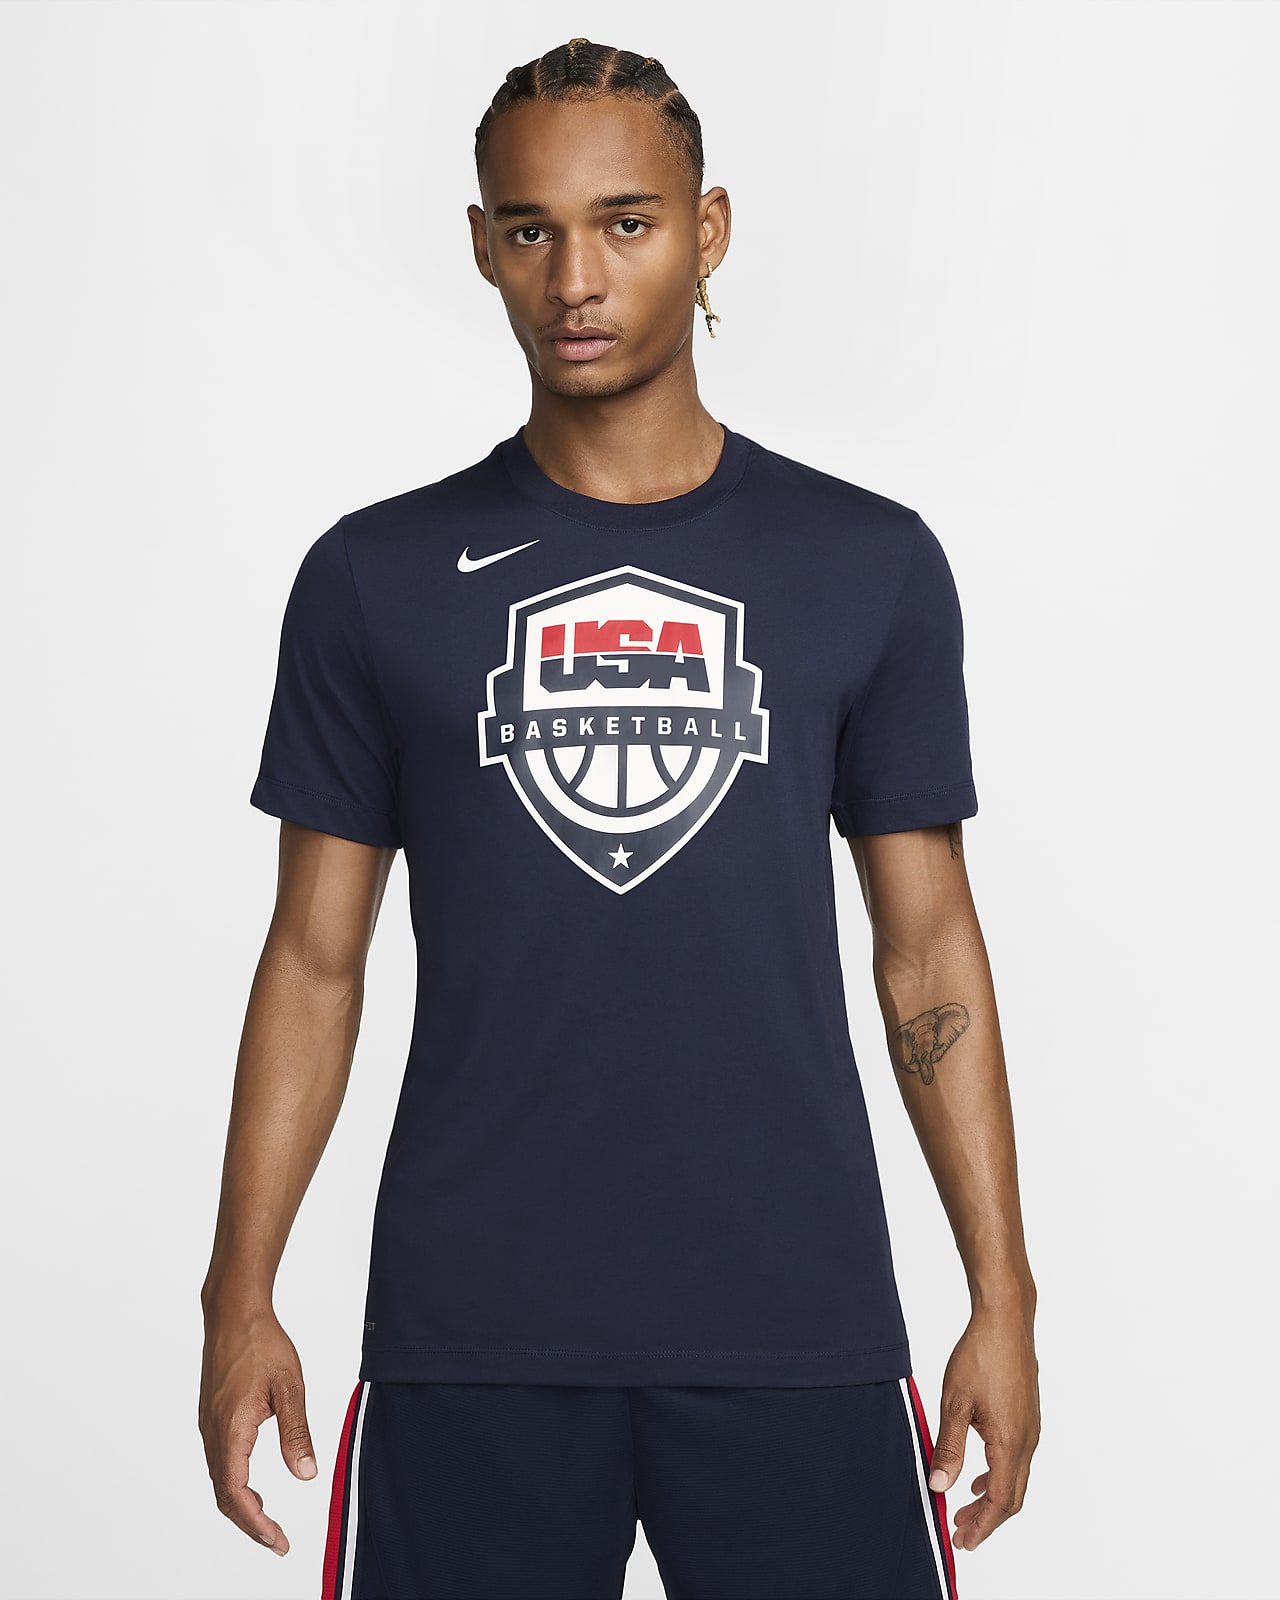 USAB Nike Dri-FIT Basketball-T-Shirt (Herren)